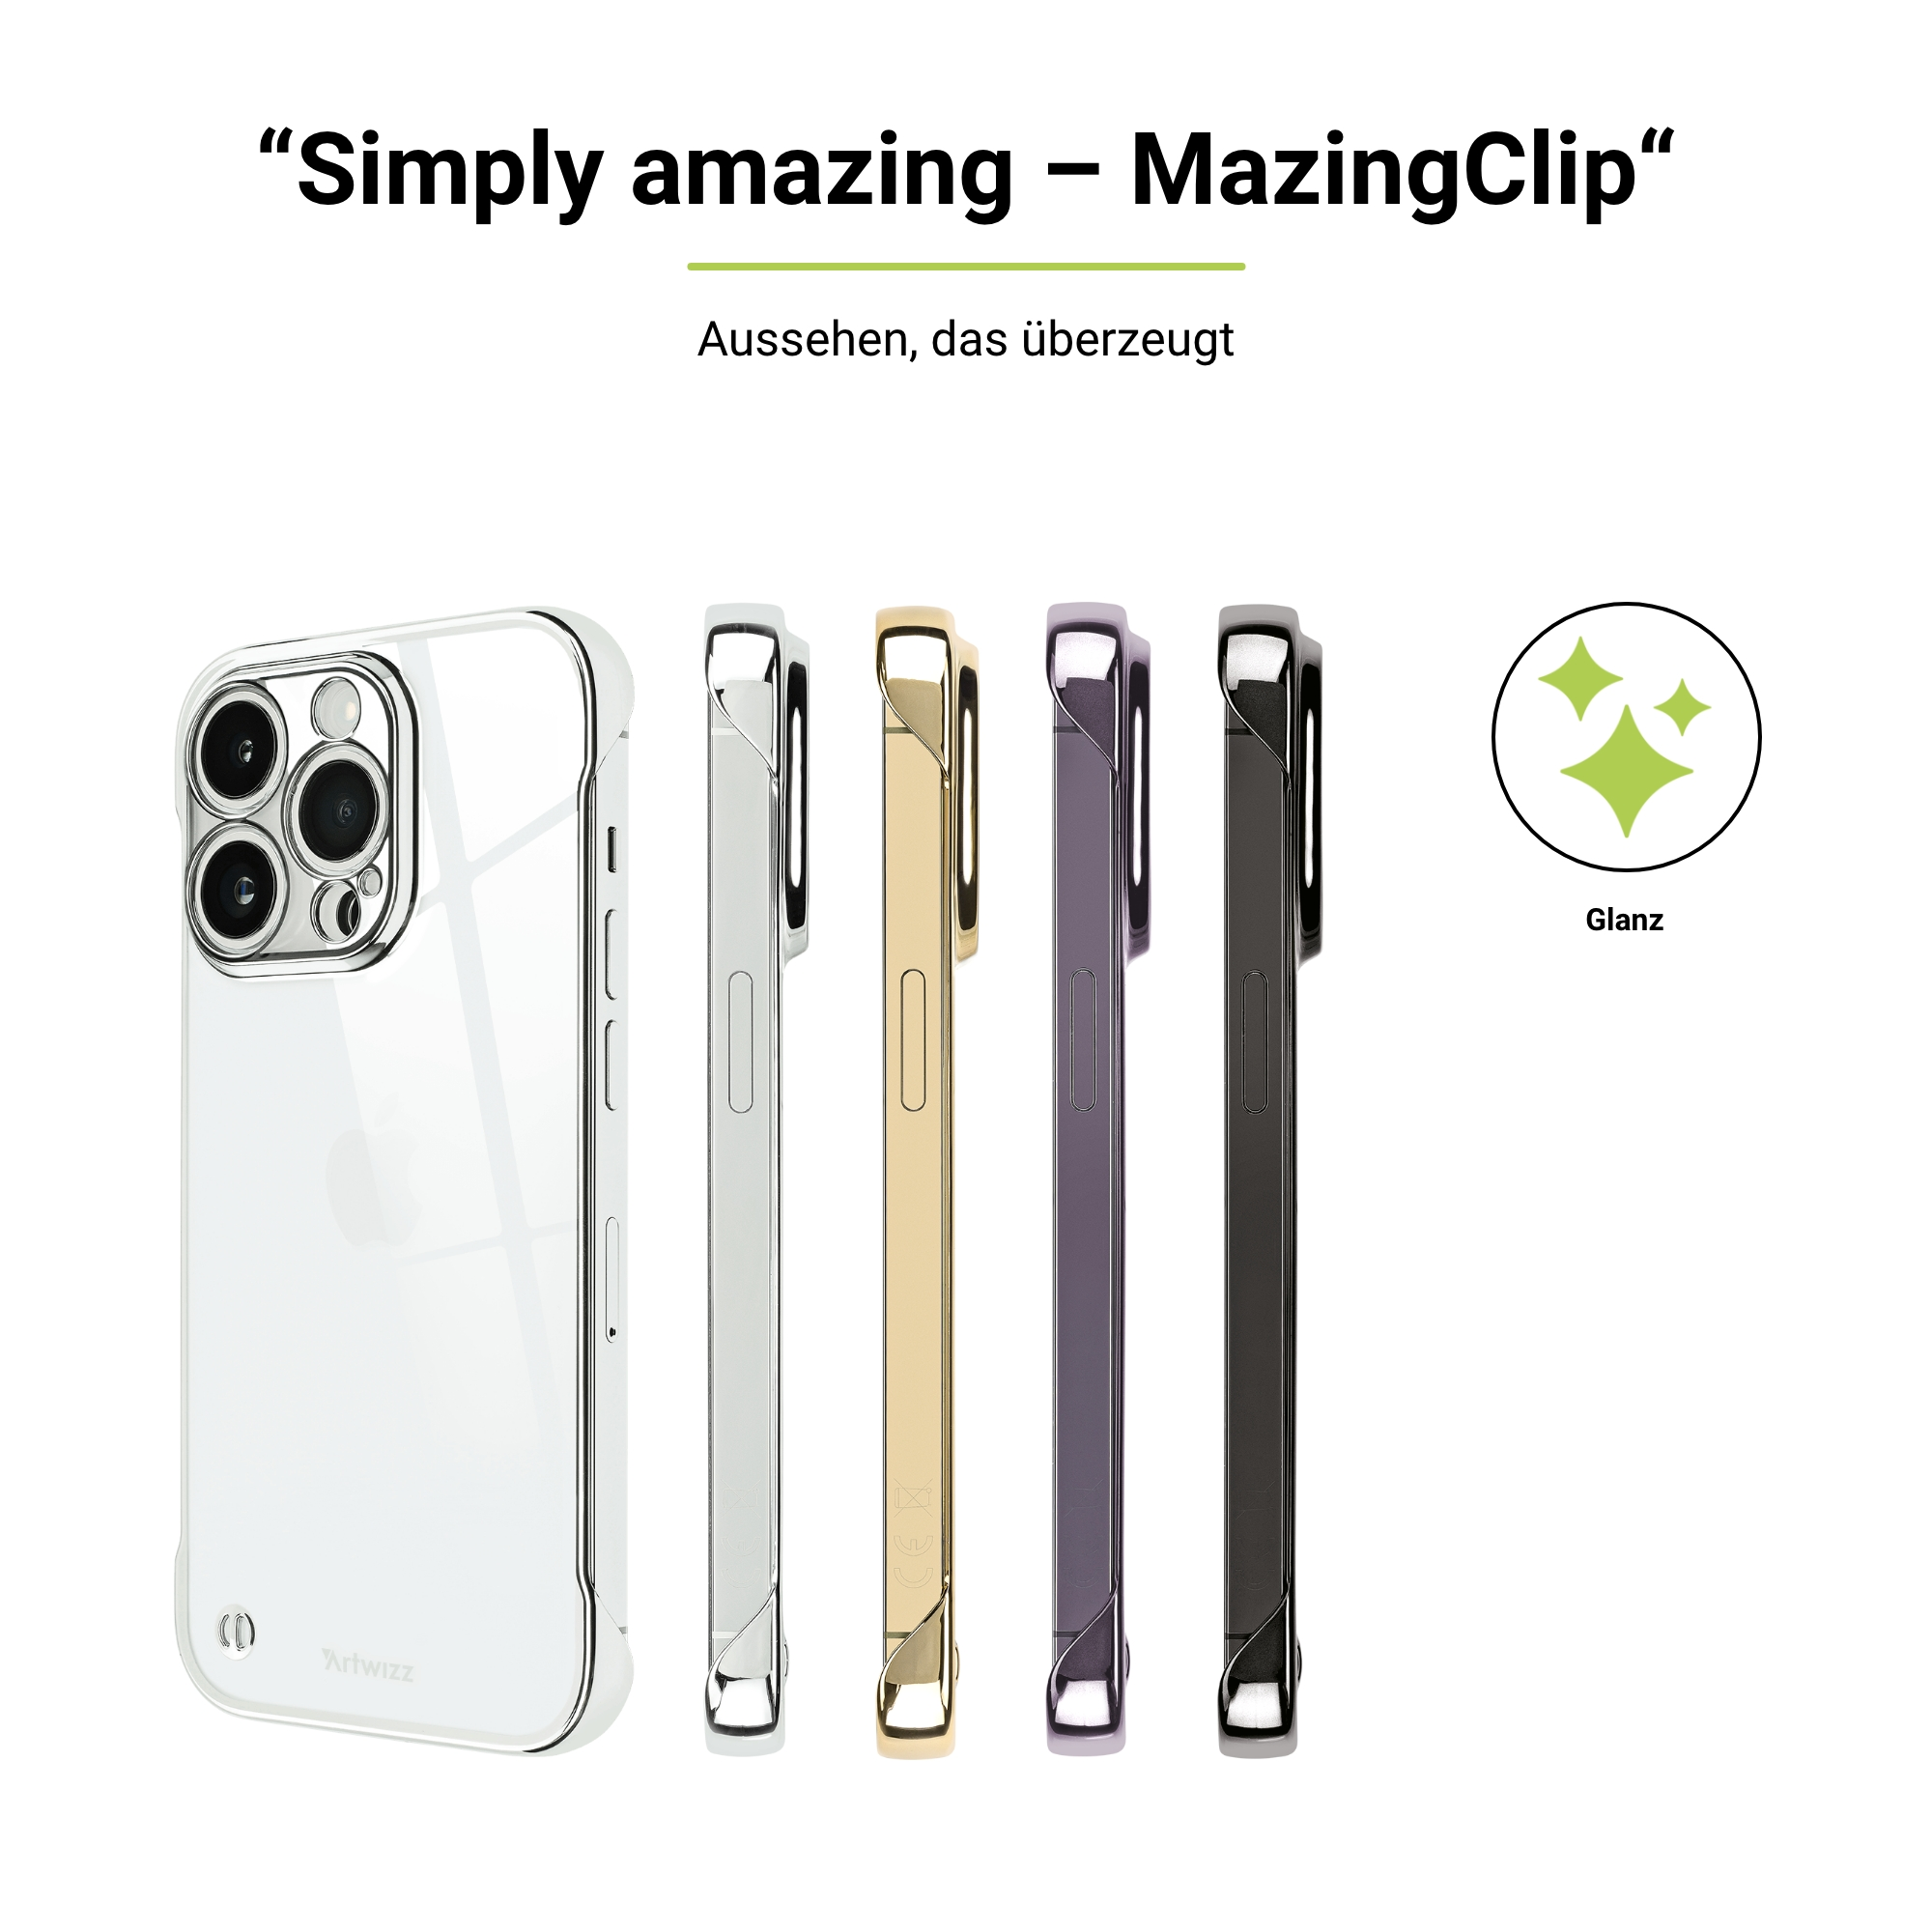 ARTWIZZ MazingClip, Backcover, Apple, iPhone 14 Silber Pro